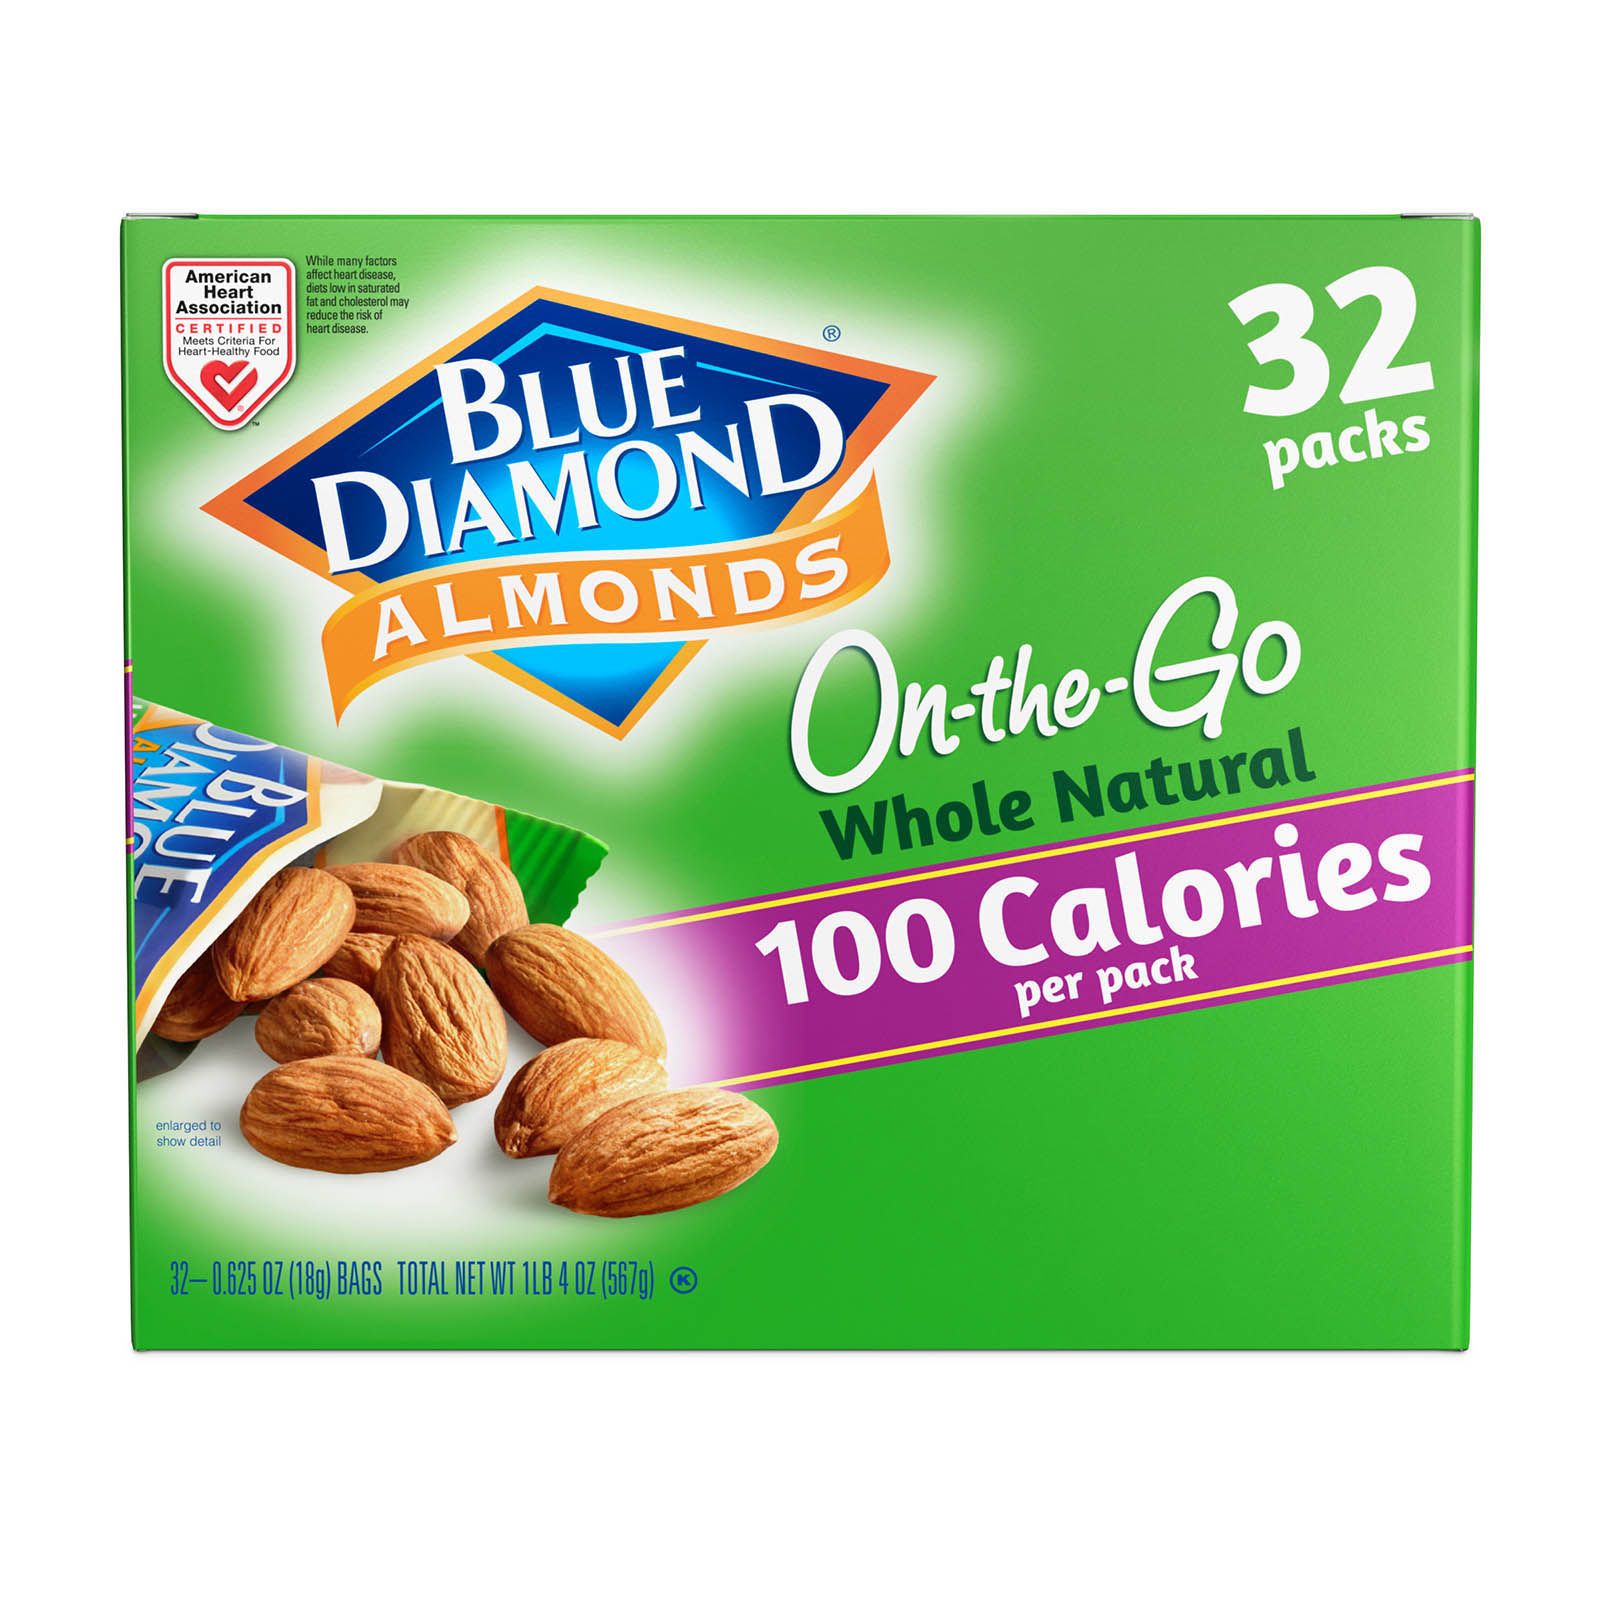 Wholesale　Natural　Snack　BJ's　Whole　Almond　Packs　Diamond　ct.　32　Blue　Club